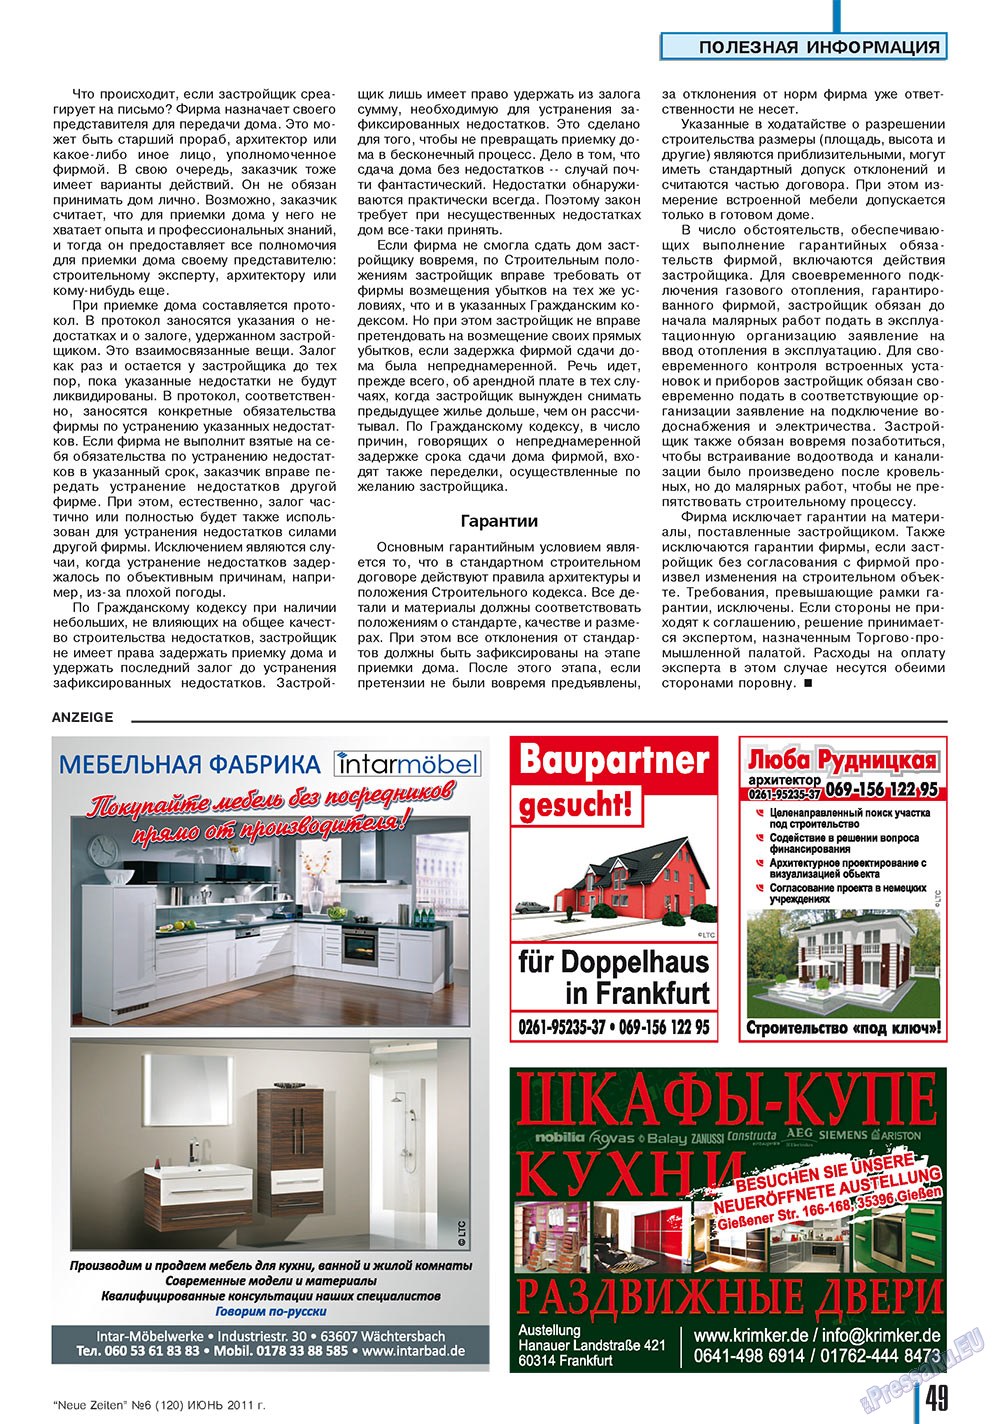 Neue Zeiten (журнал). 2011 год, номер 6, стр. 49